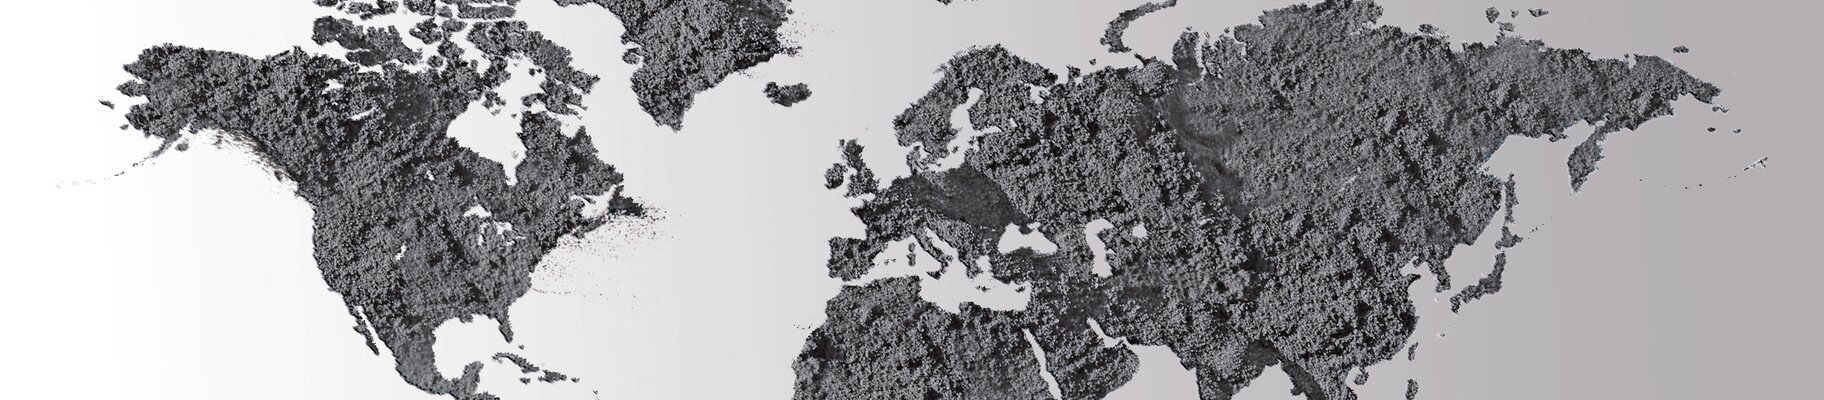 World map made of powder